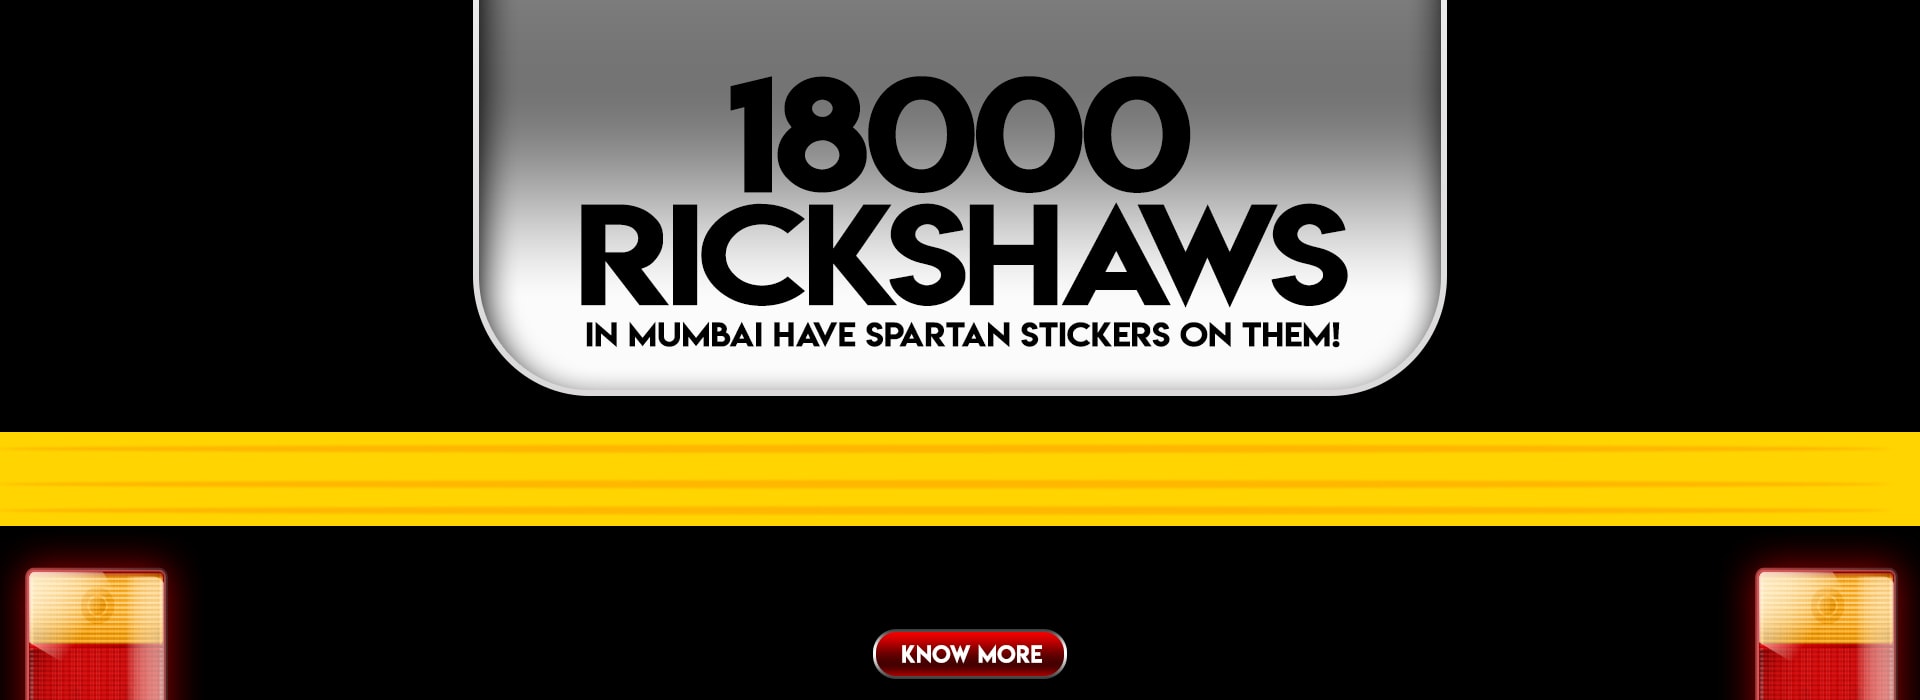 Spartan Stickers on 18000 rickshaws